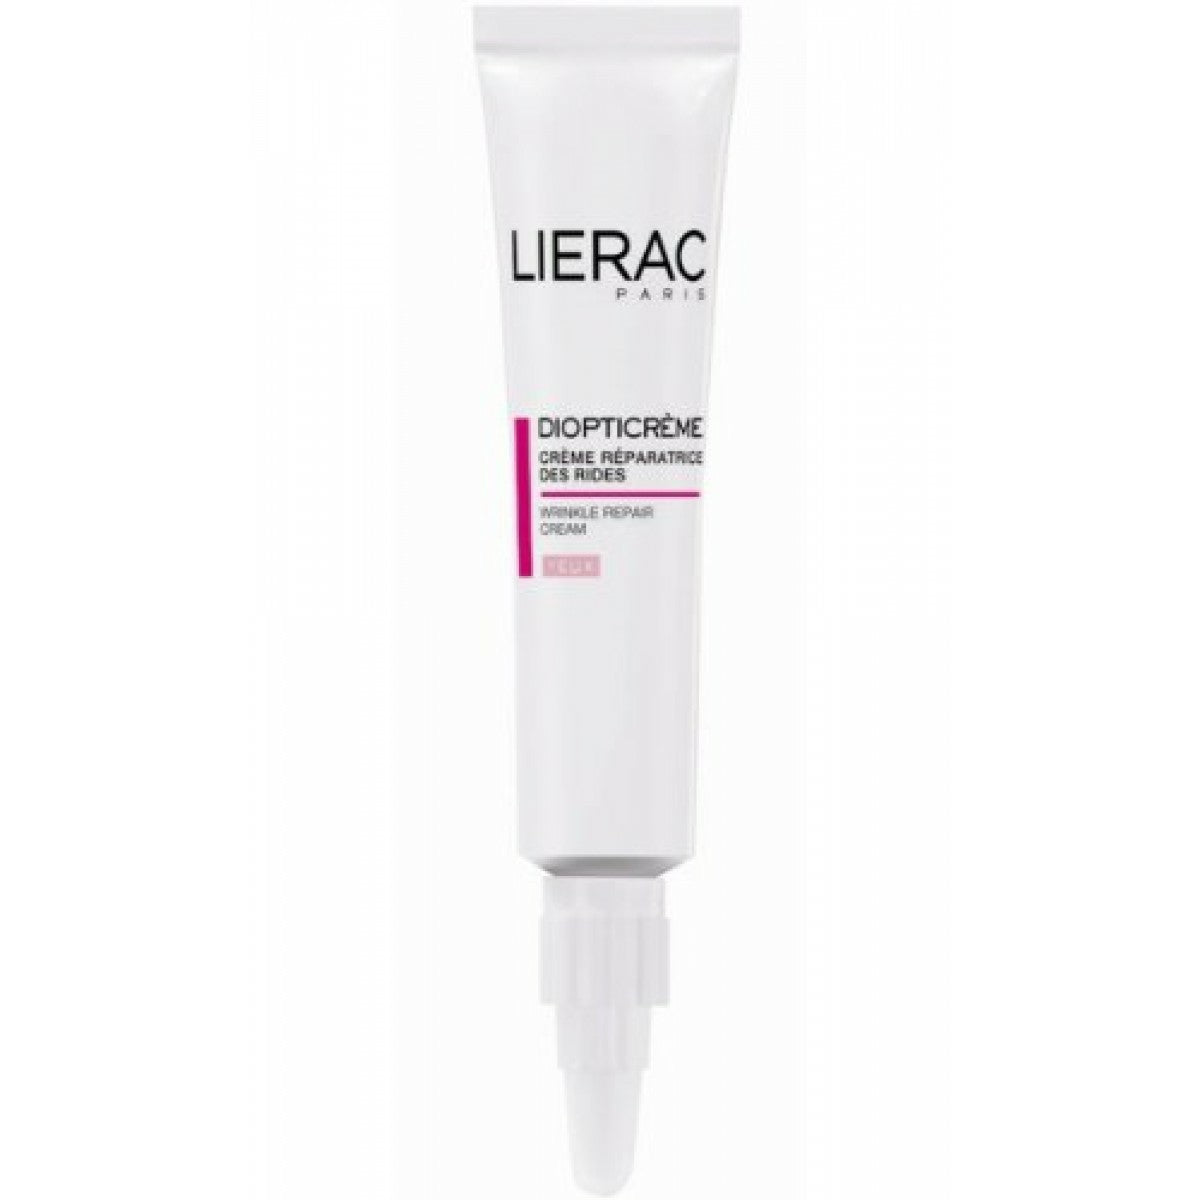 Lirac Diopticrem Anti-wrinkle Eye Contour Cream